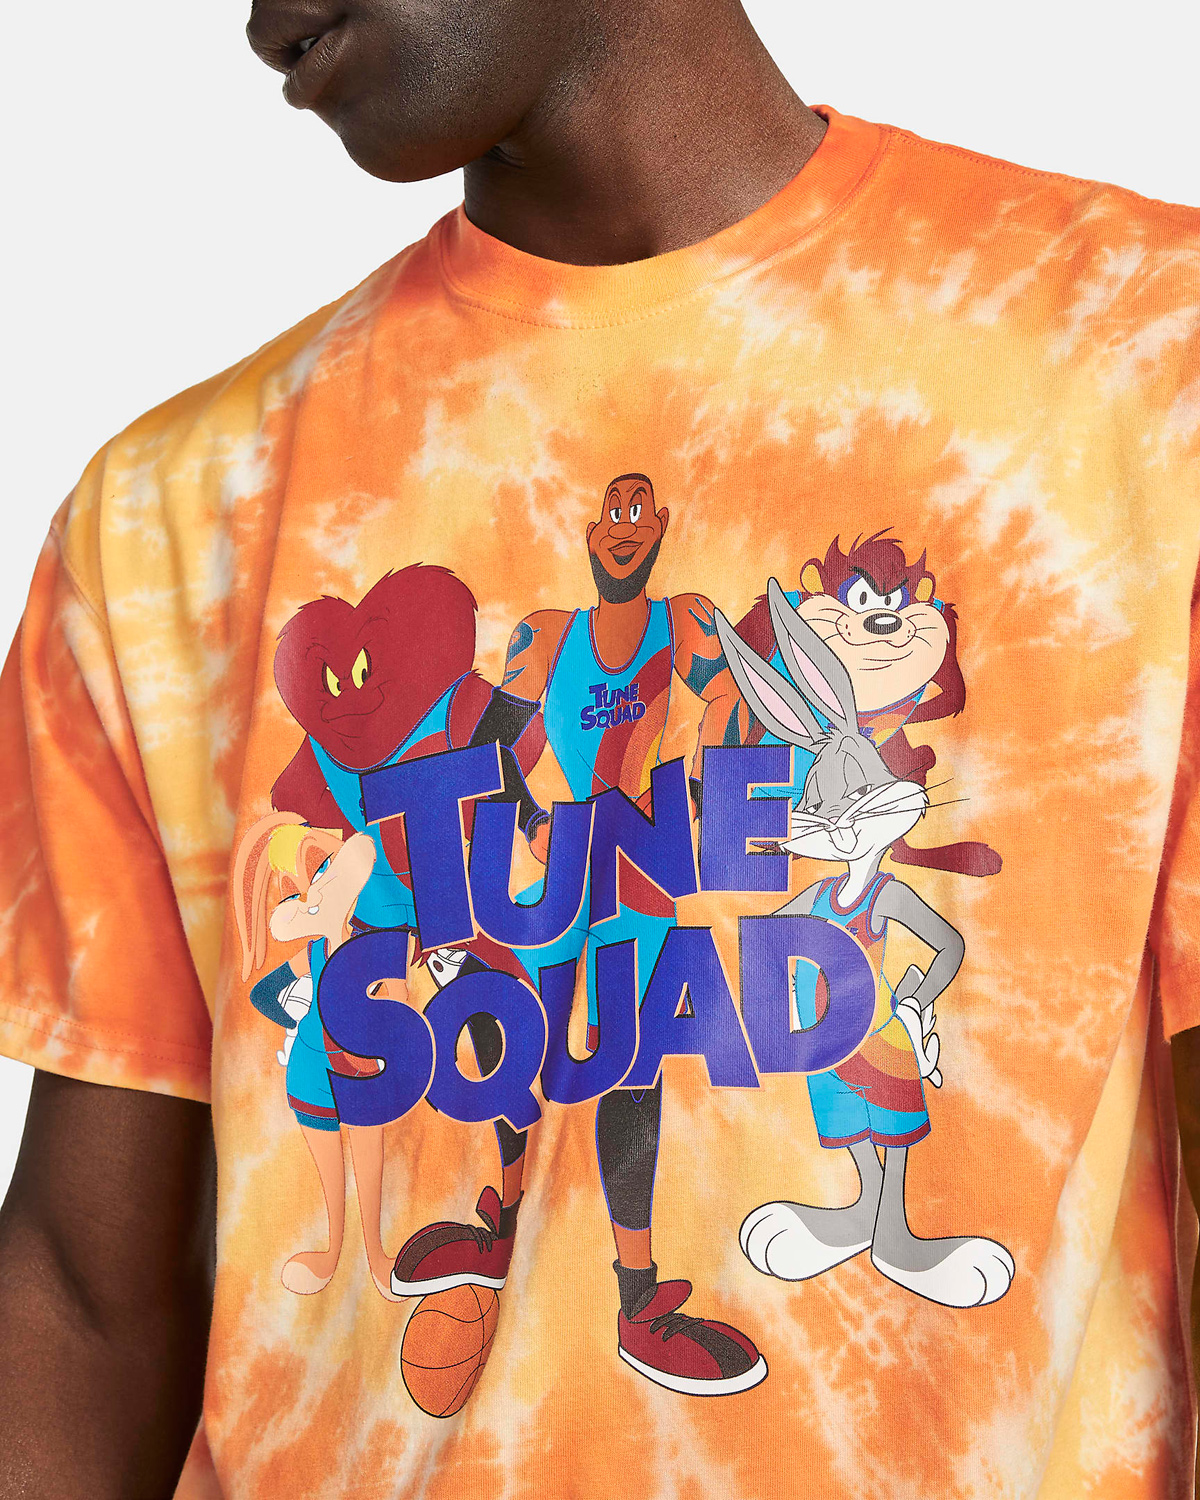 nike-space-jam-new-legacy-tune-squad-tie-dye-shirt-orange-2